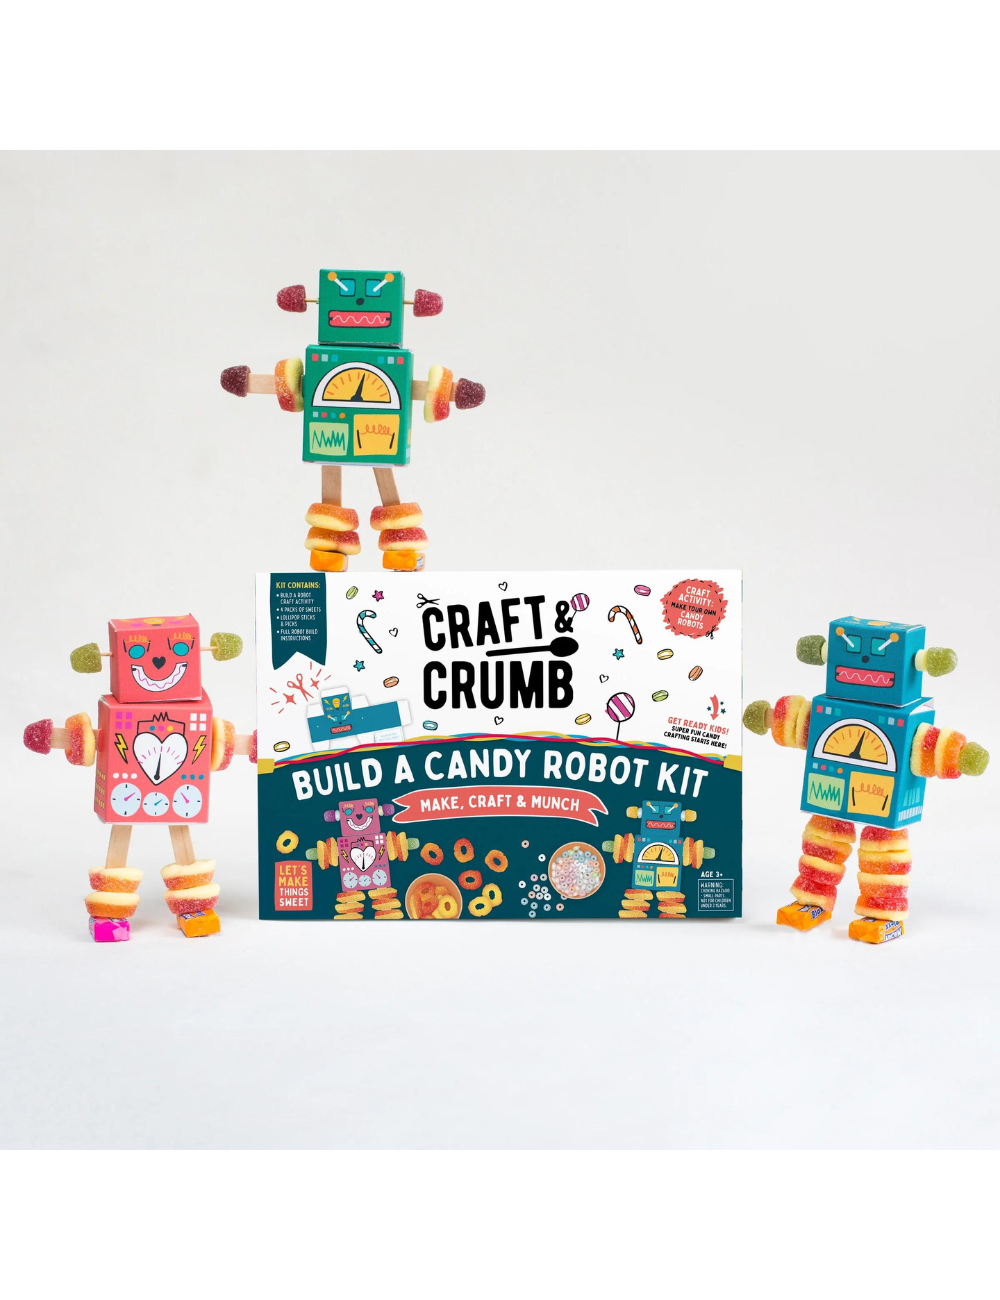 Build a Candy Robot Kit